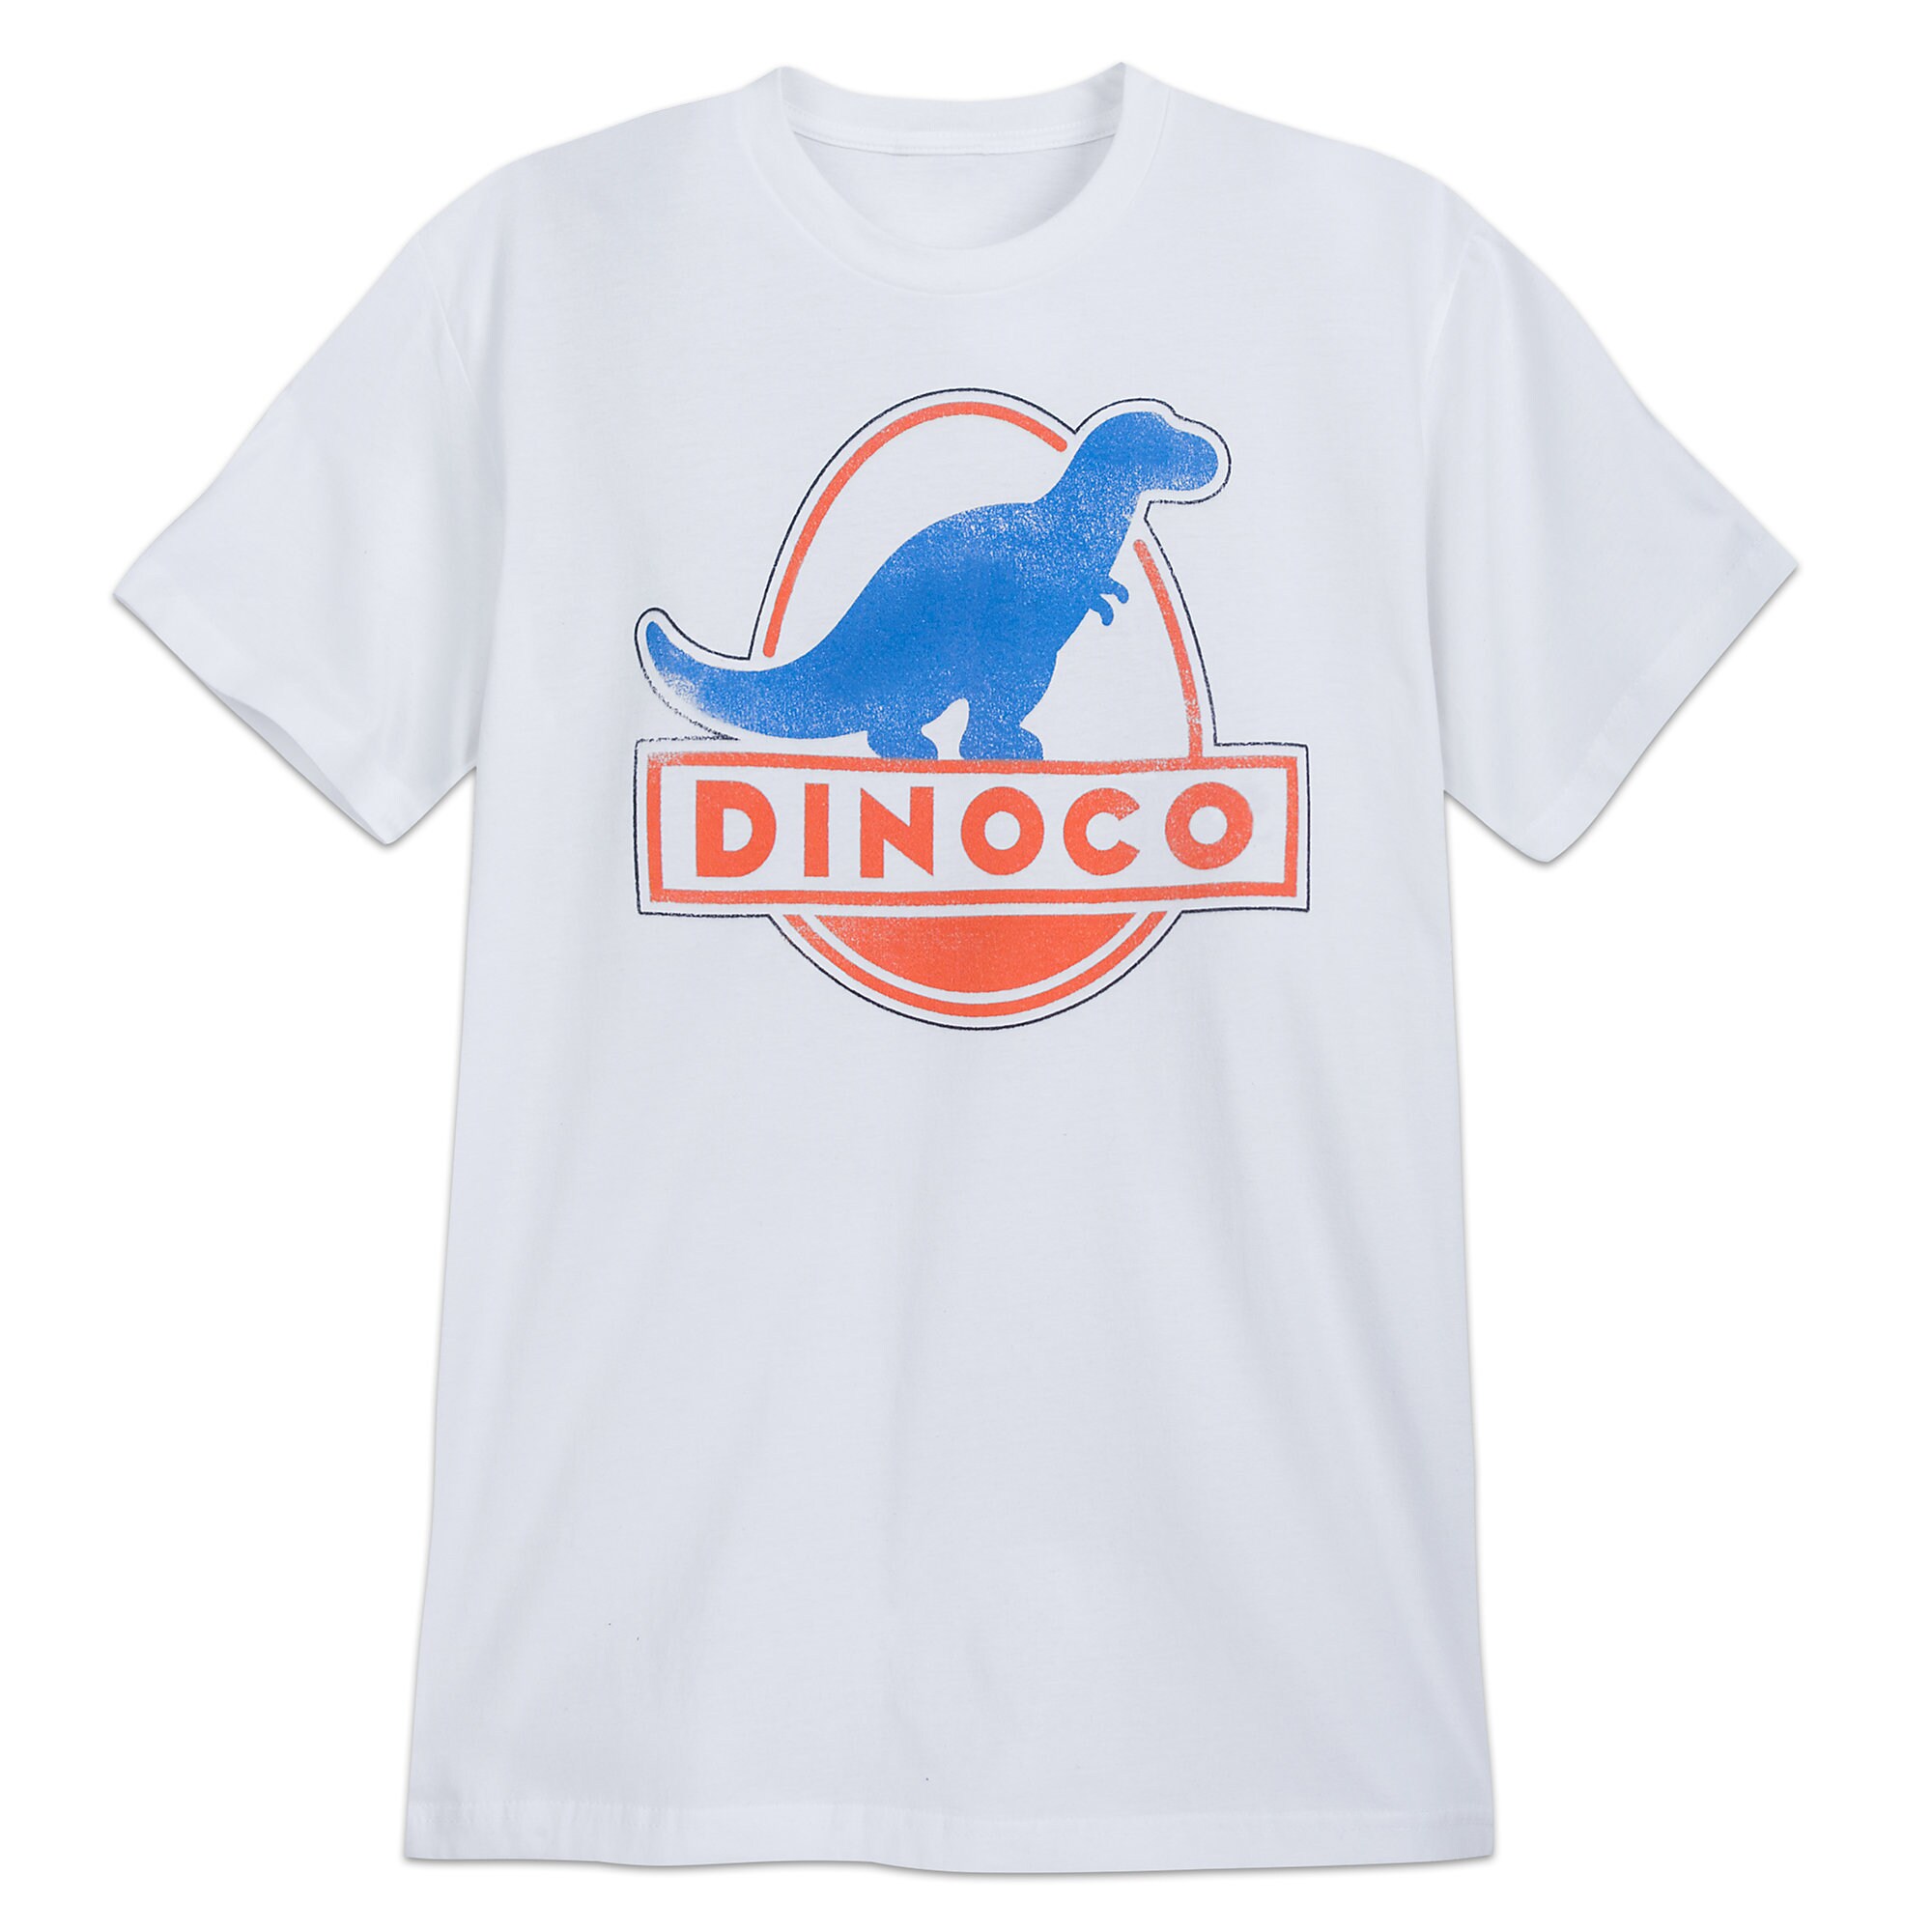 Dinoco Logo T-Shirt for Men - Cars